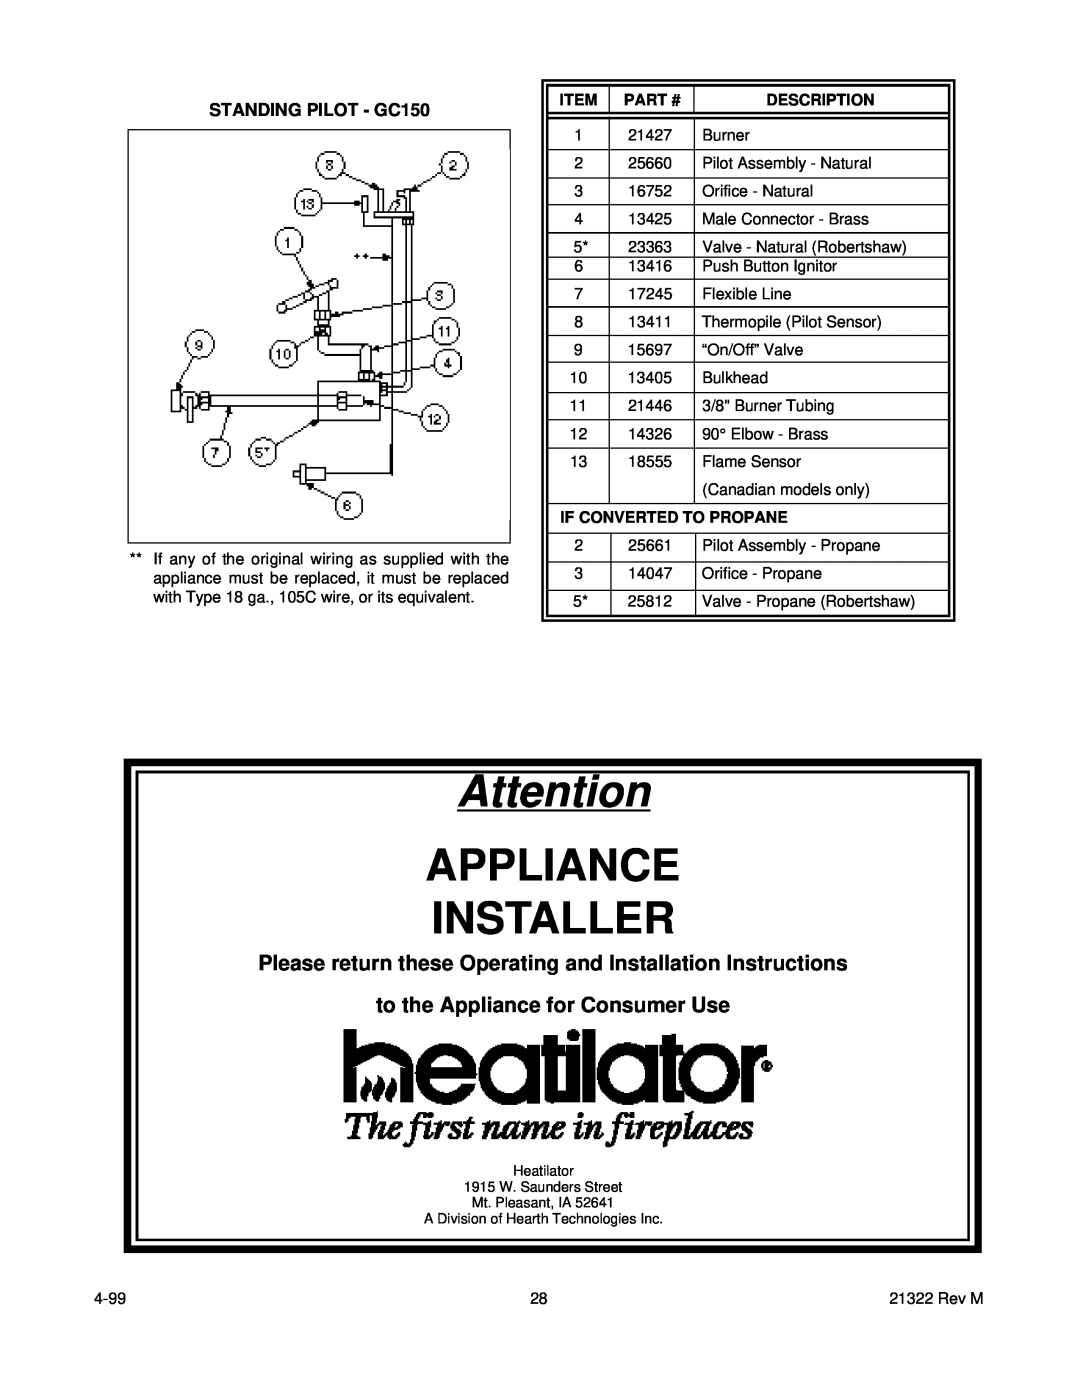 Heatiator to the Appliance for Consumer Use, Appliance Installer, STANDING PILOT - GC150, Part #, Description 